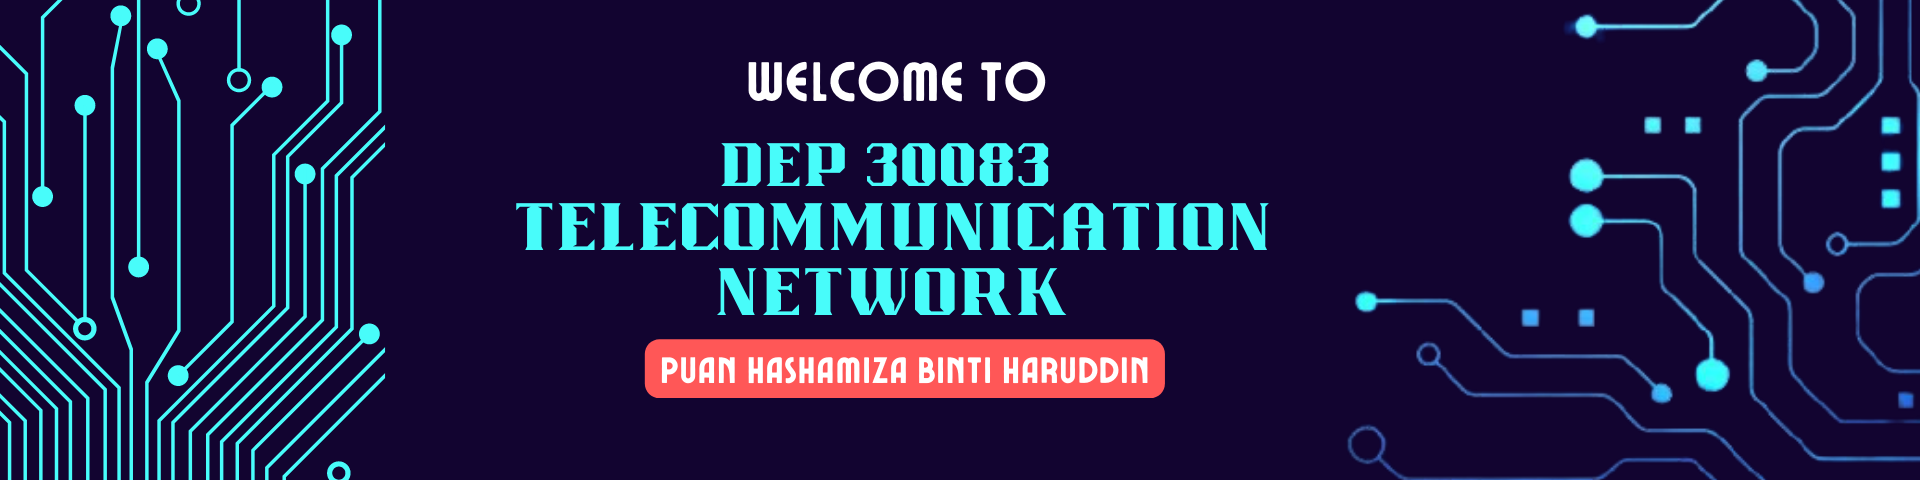 DEP30083-TELECOMMUNICATION NETWORK